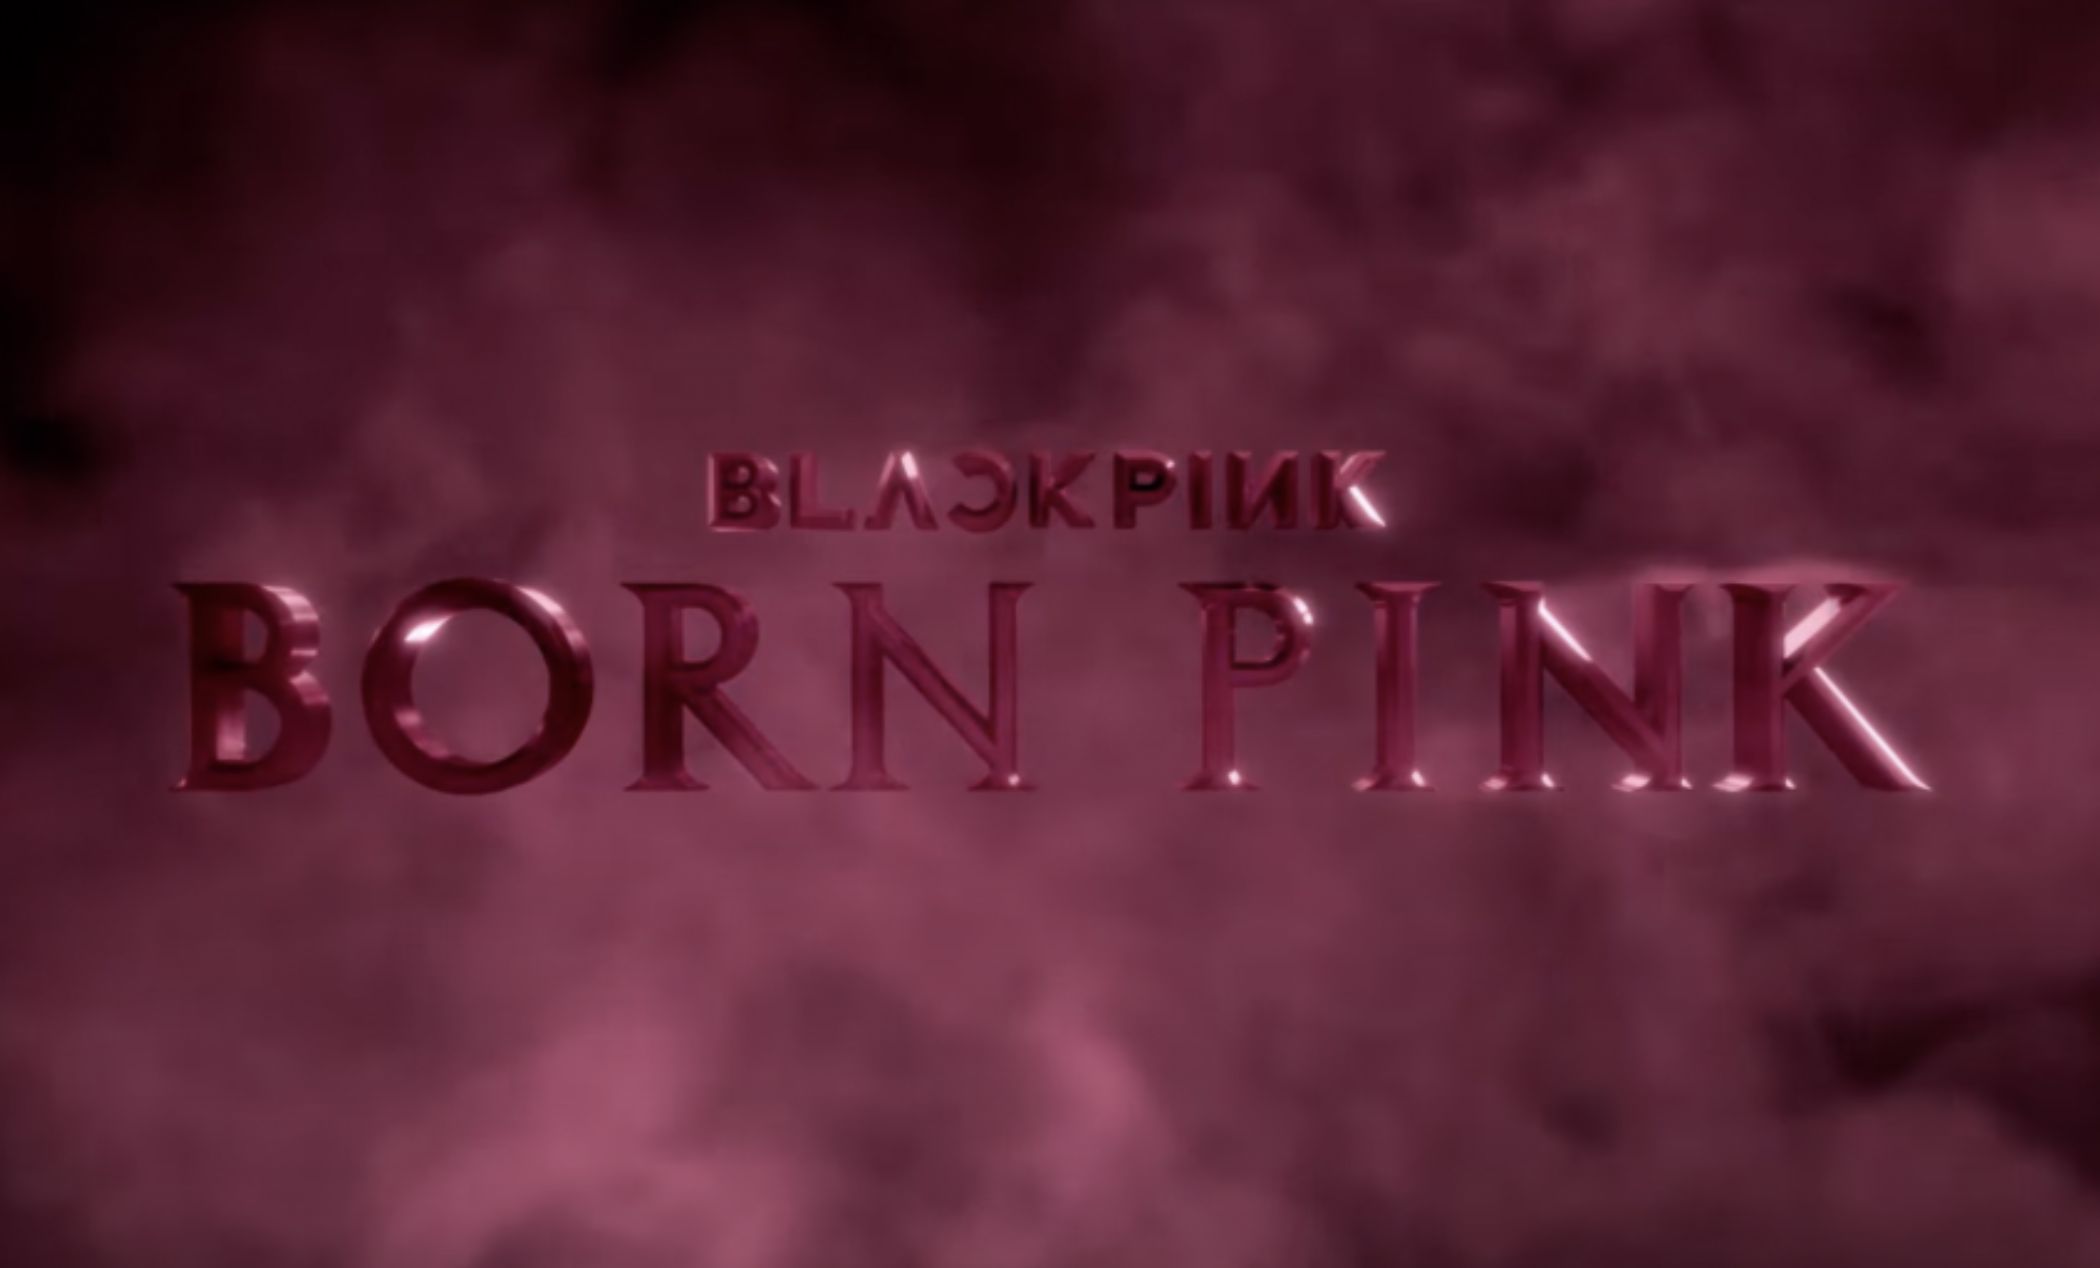 Blackpink drops 'Born Pink' announcement trailer⁠; confirms world tour this fall